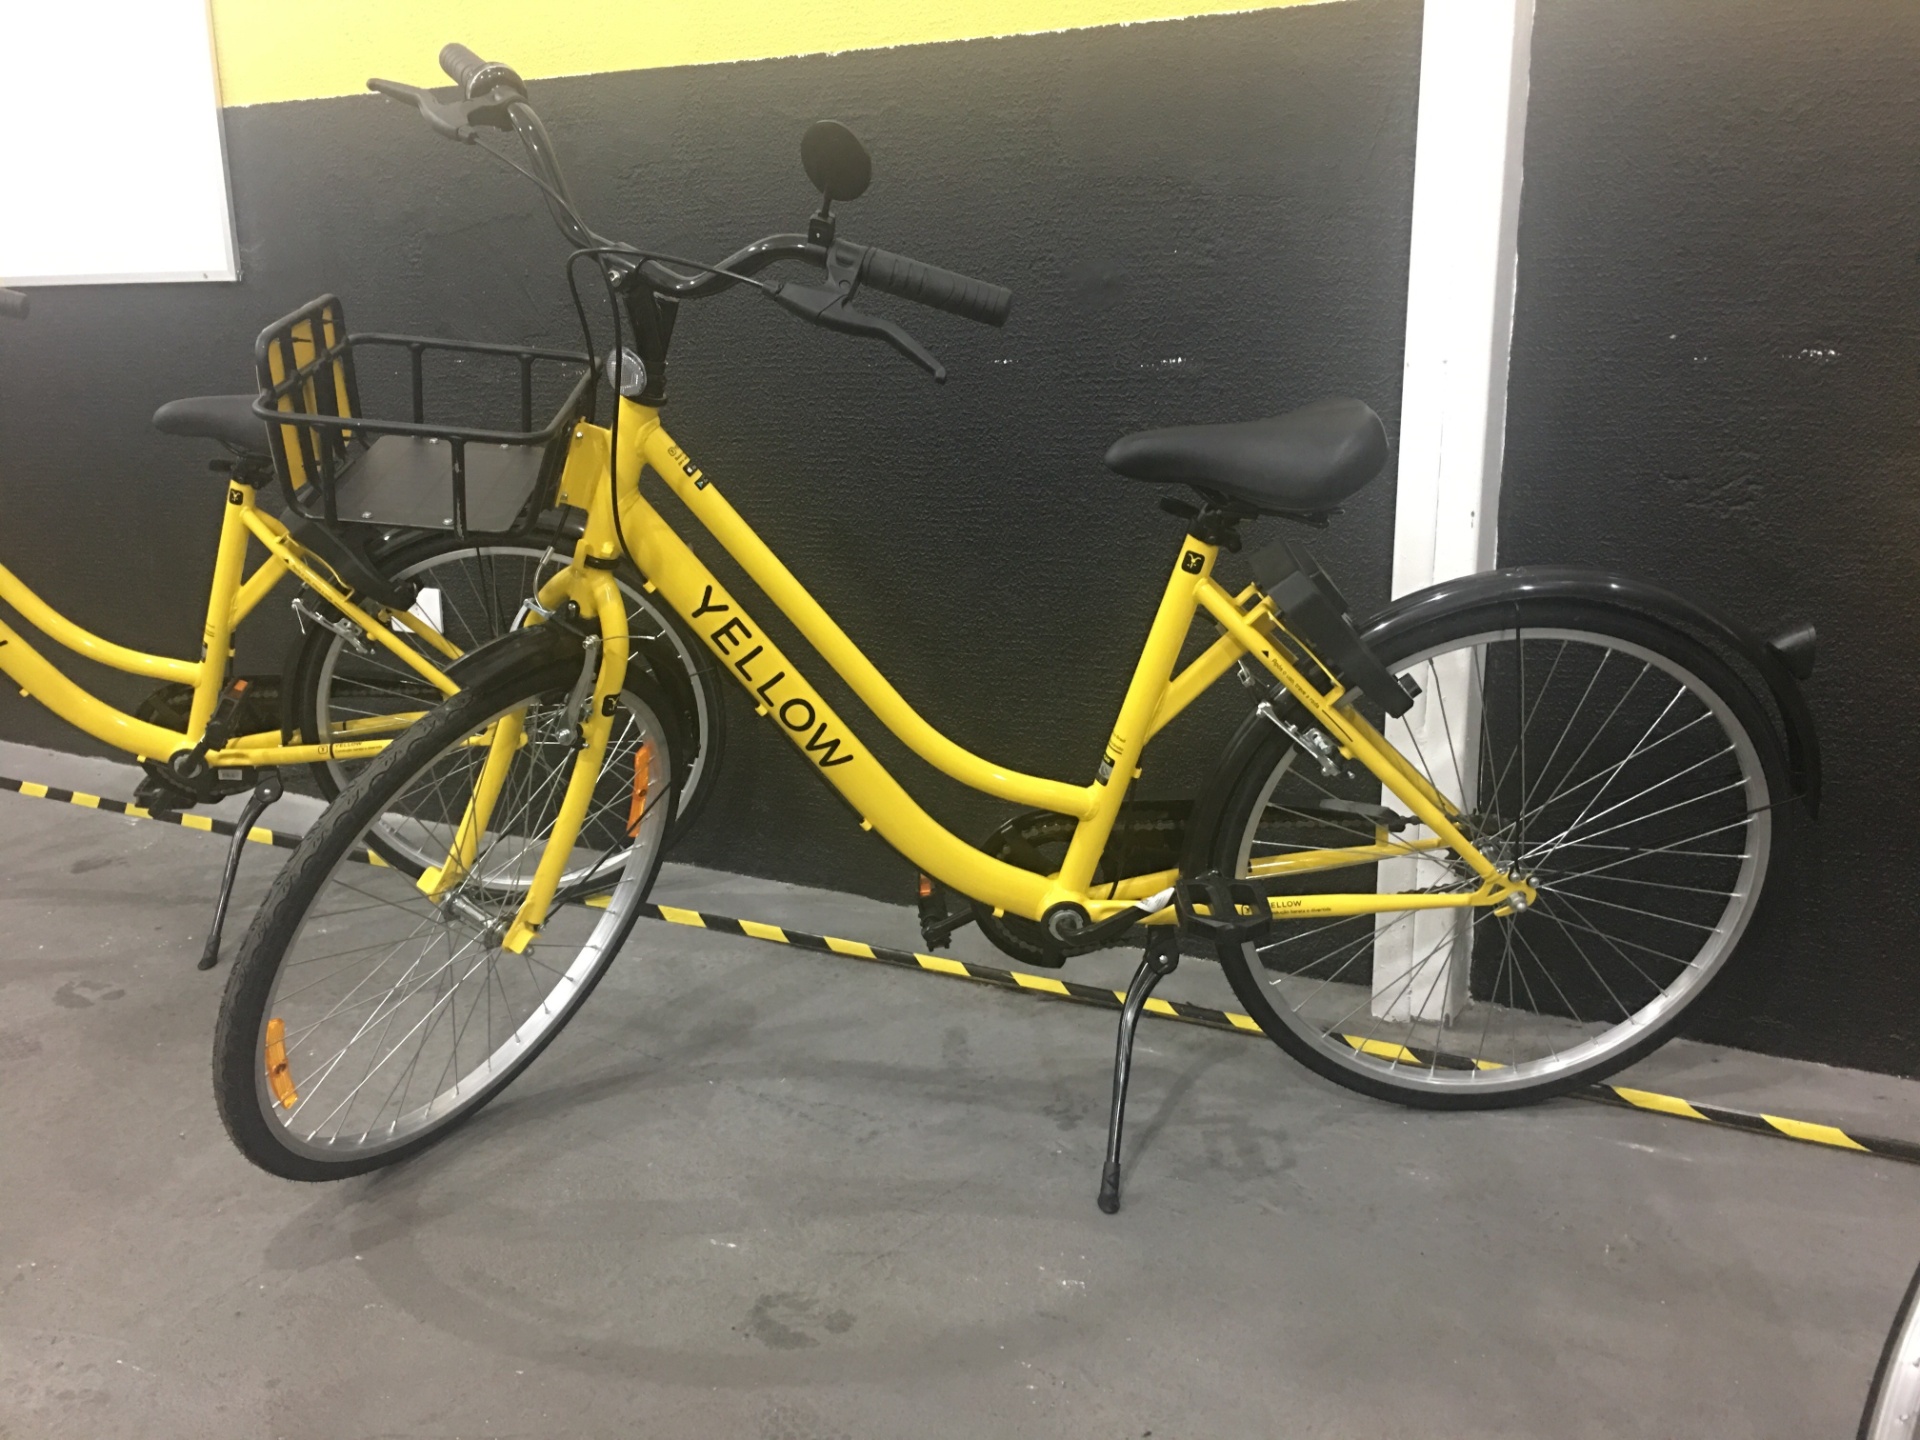 Yellow, empresa de compartilhamento de bicicletas, recebe investimento de US$63mi